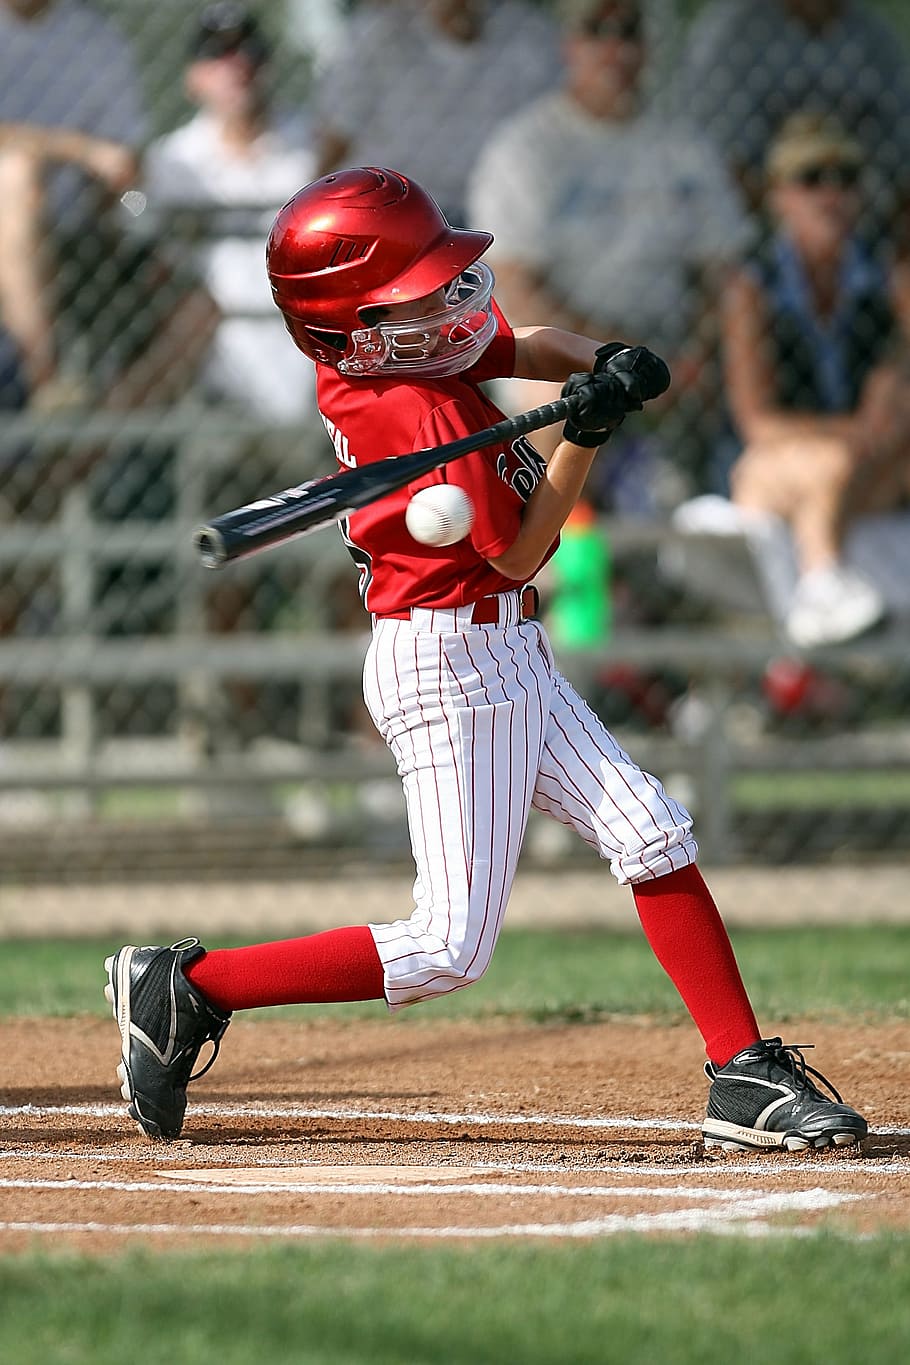 manusia bermain baseball, baseball, adonan, baseball bat, bola, pemukul, liga kecil, muda, pemuda, anak laki-laki